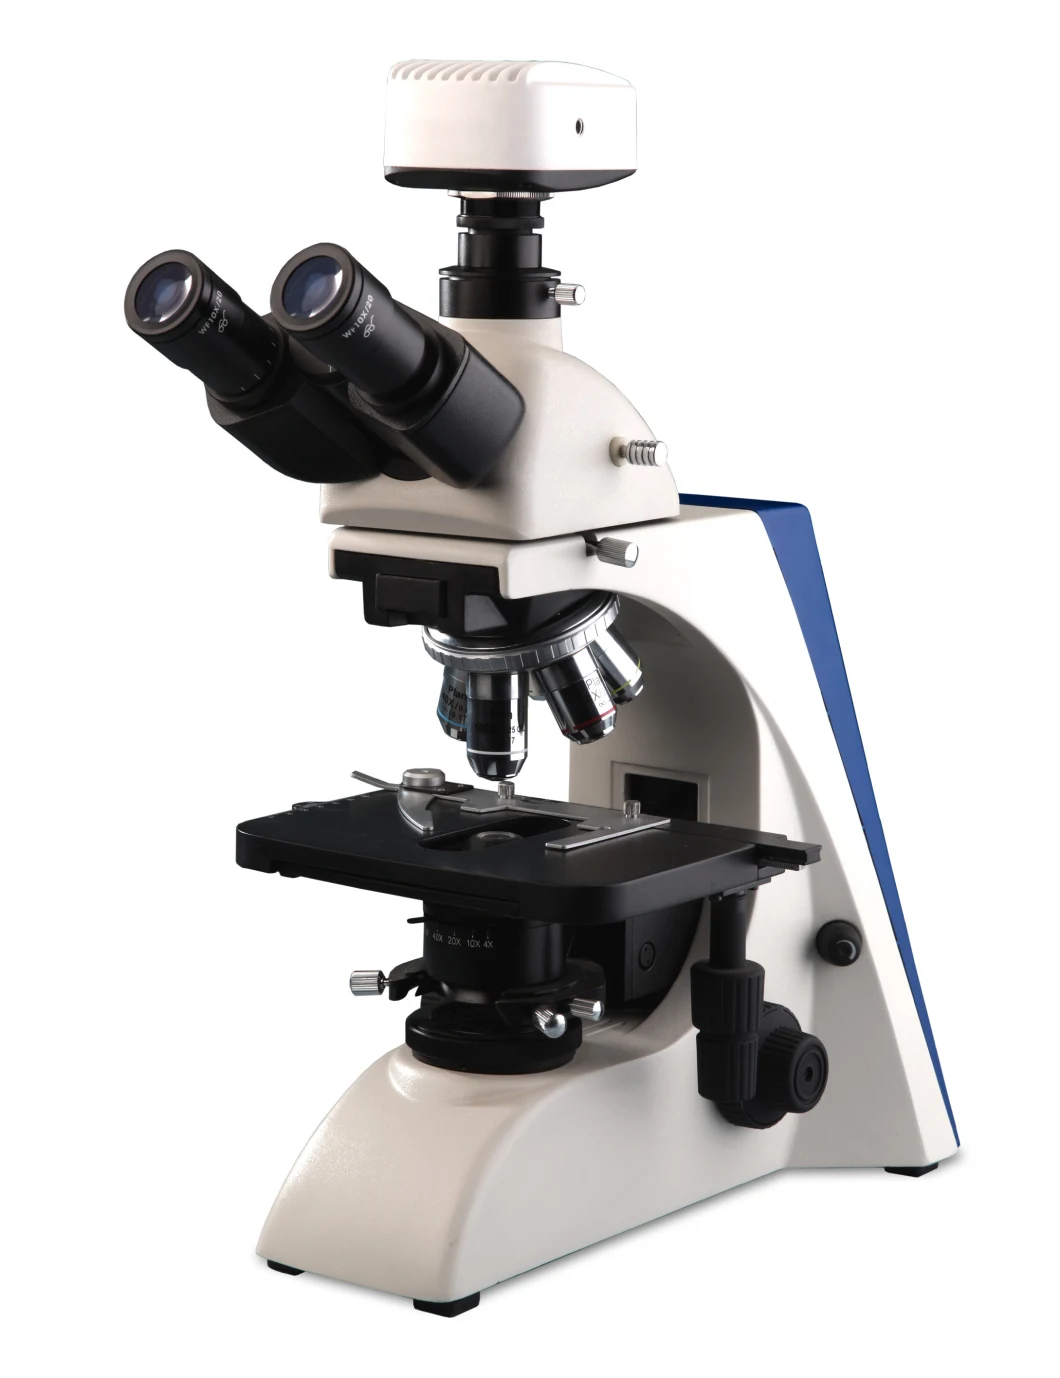 New LED Light Laboratory Microscope Infinity Corrected Microscope